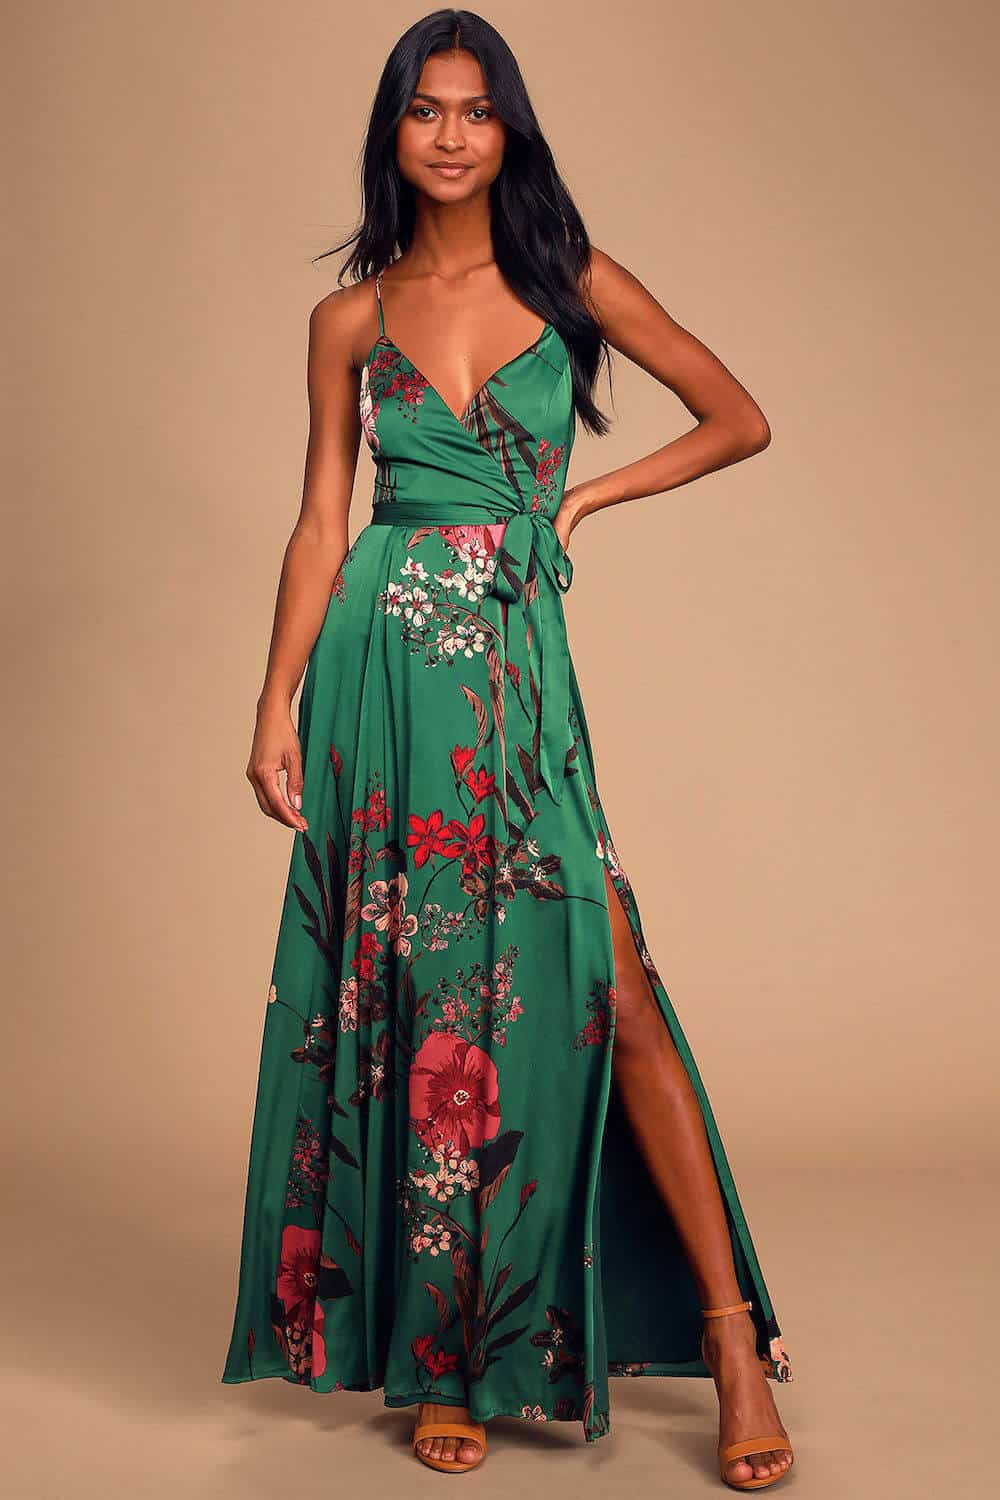 Floral Bridesmaid Dresses Online Emerald Green Floral Print Satin Maxi Dress Lulus 2